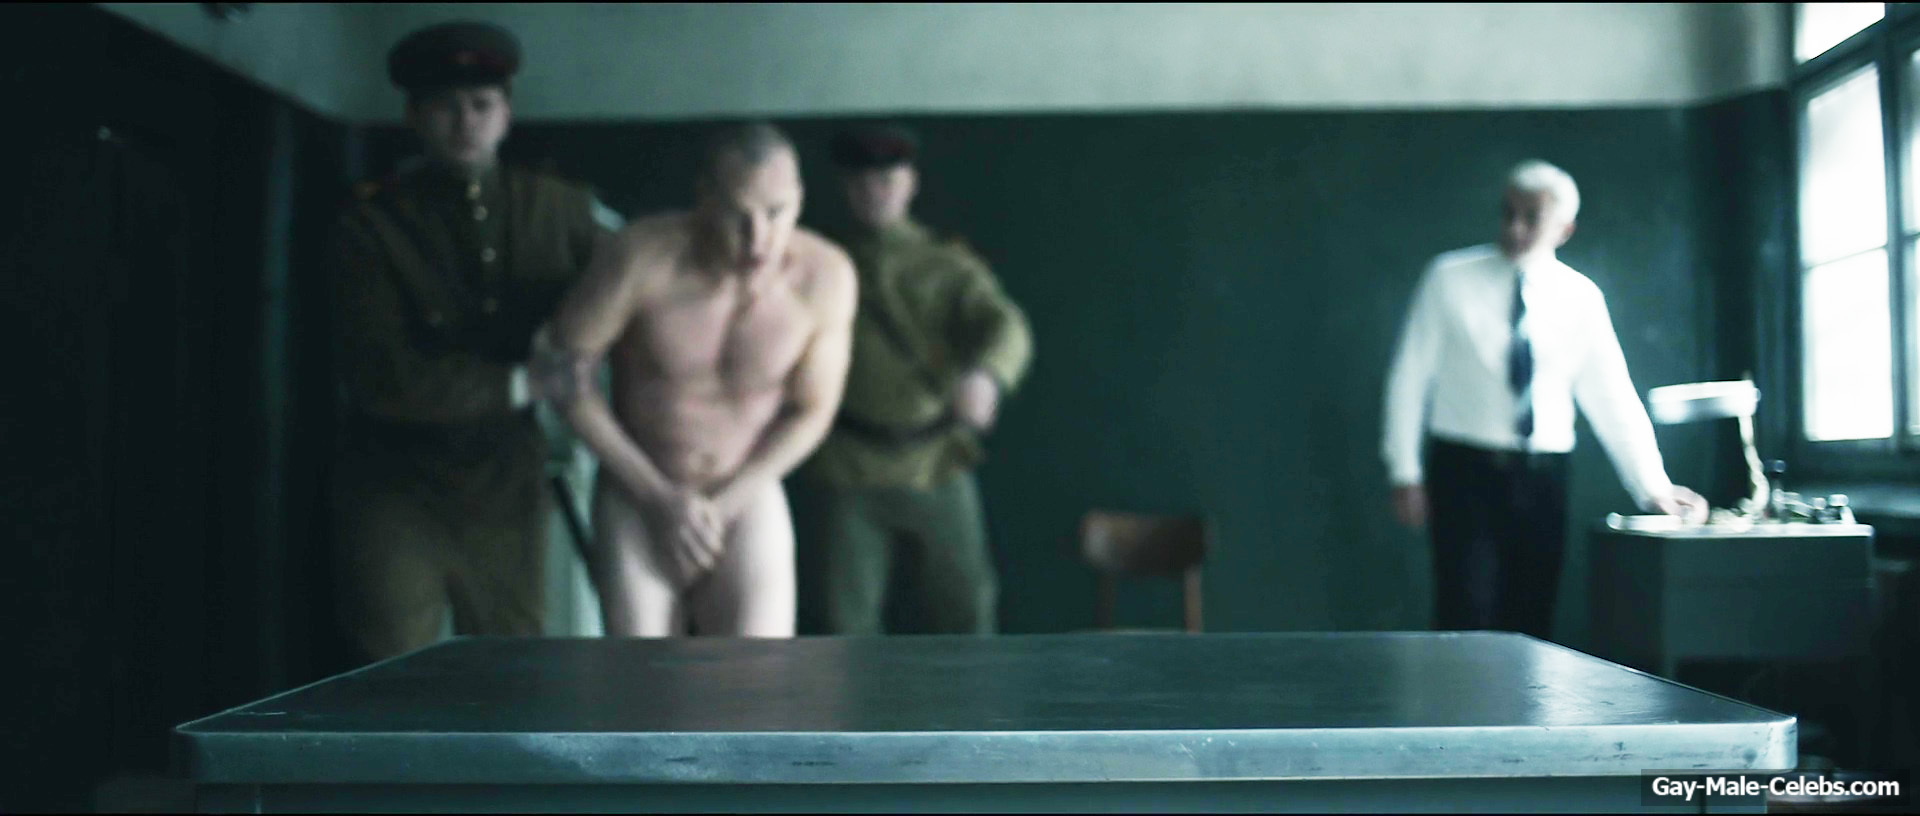 Benedict Cumberbatch Nude Shower Scenes In The Courier